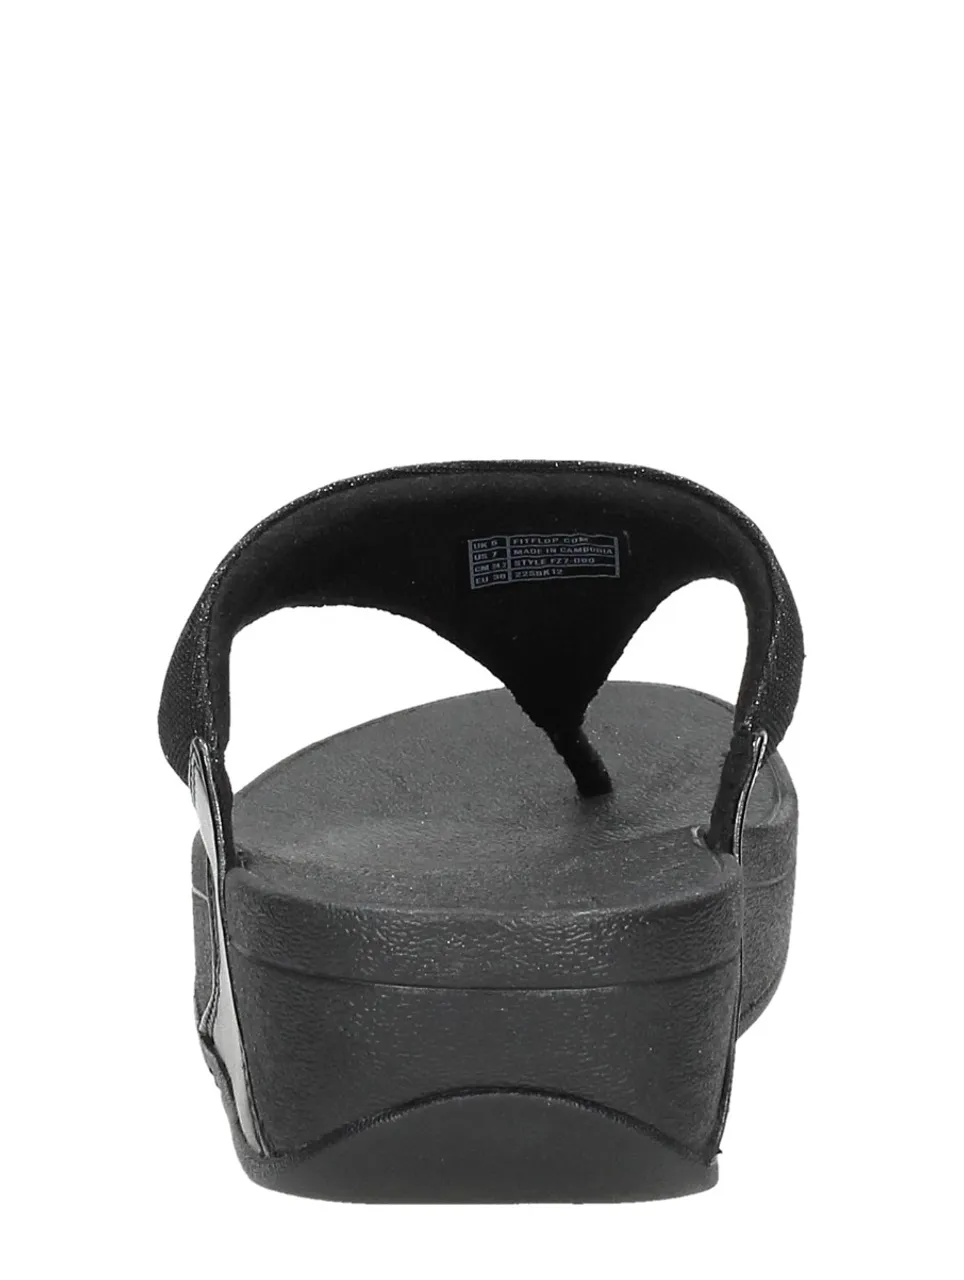 Fitflop - Lulu Shimmerlux Toe - Post Sandals